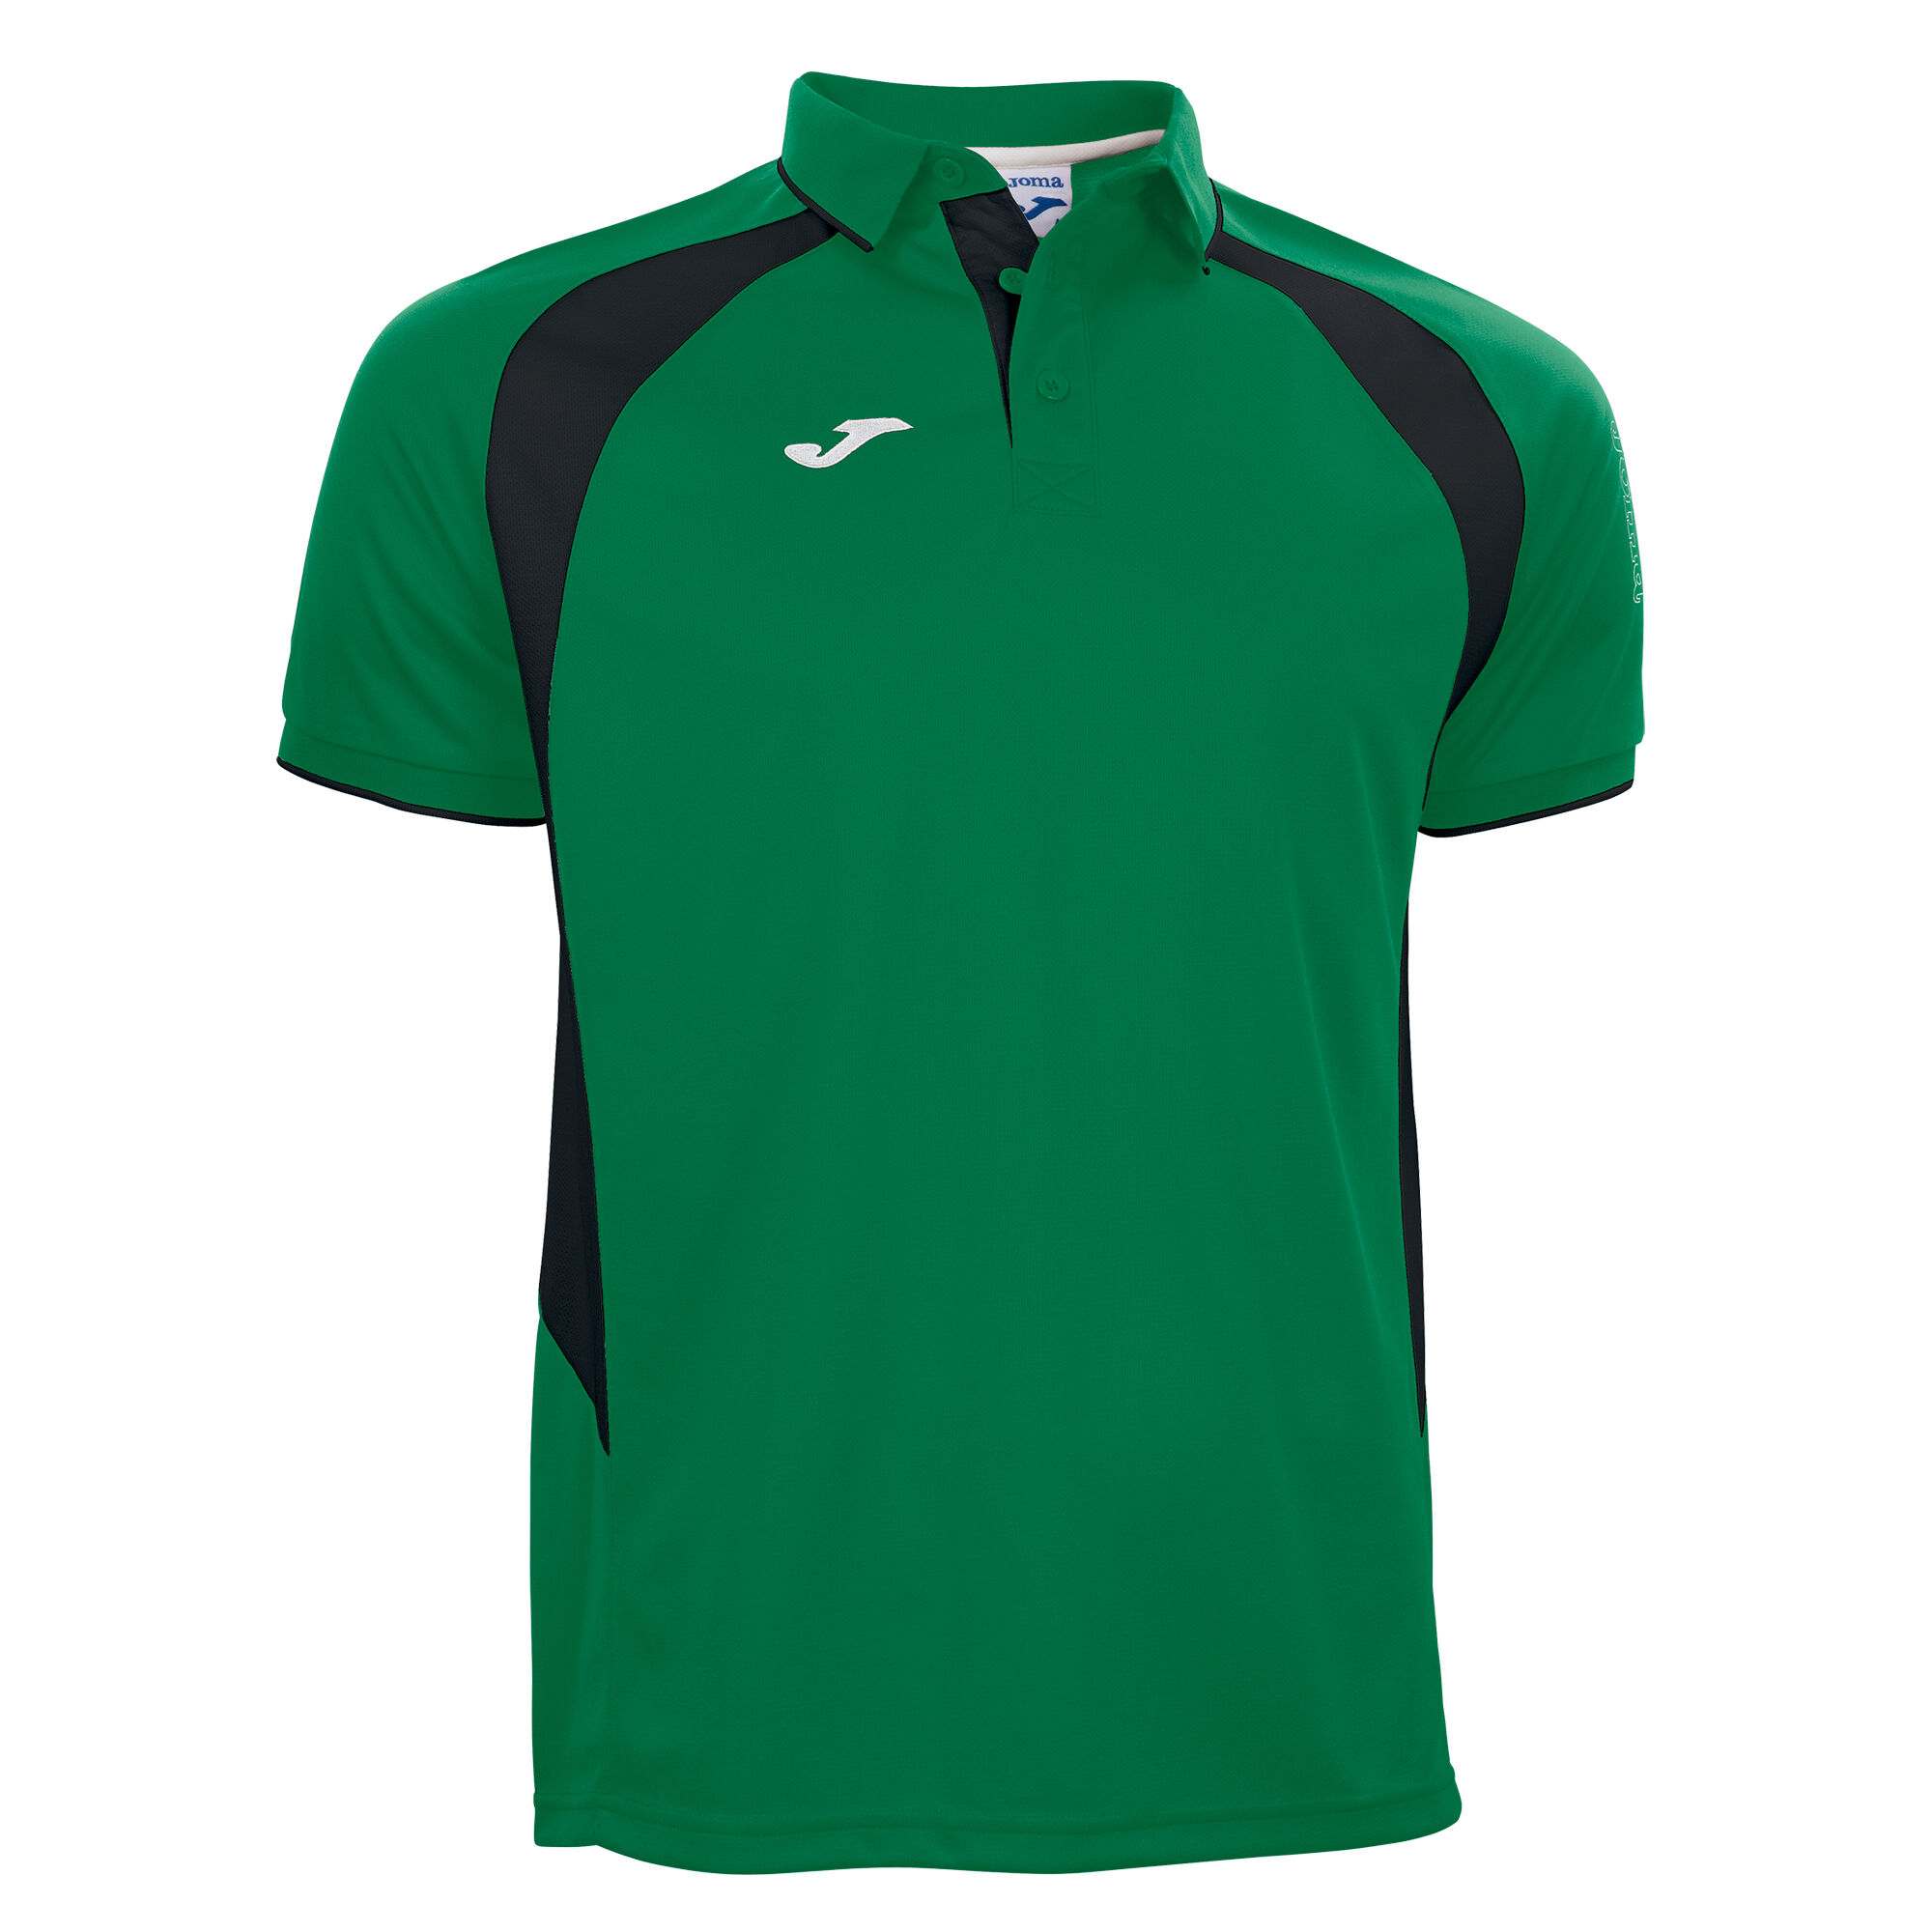 Polo shirt short-sleeve man Championship III green black